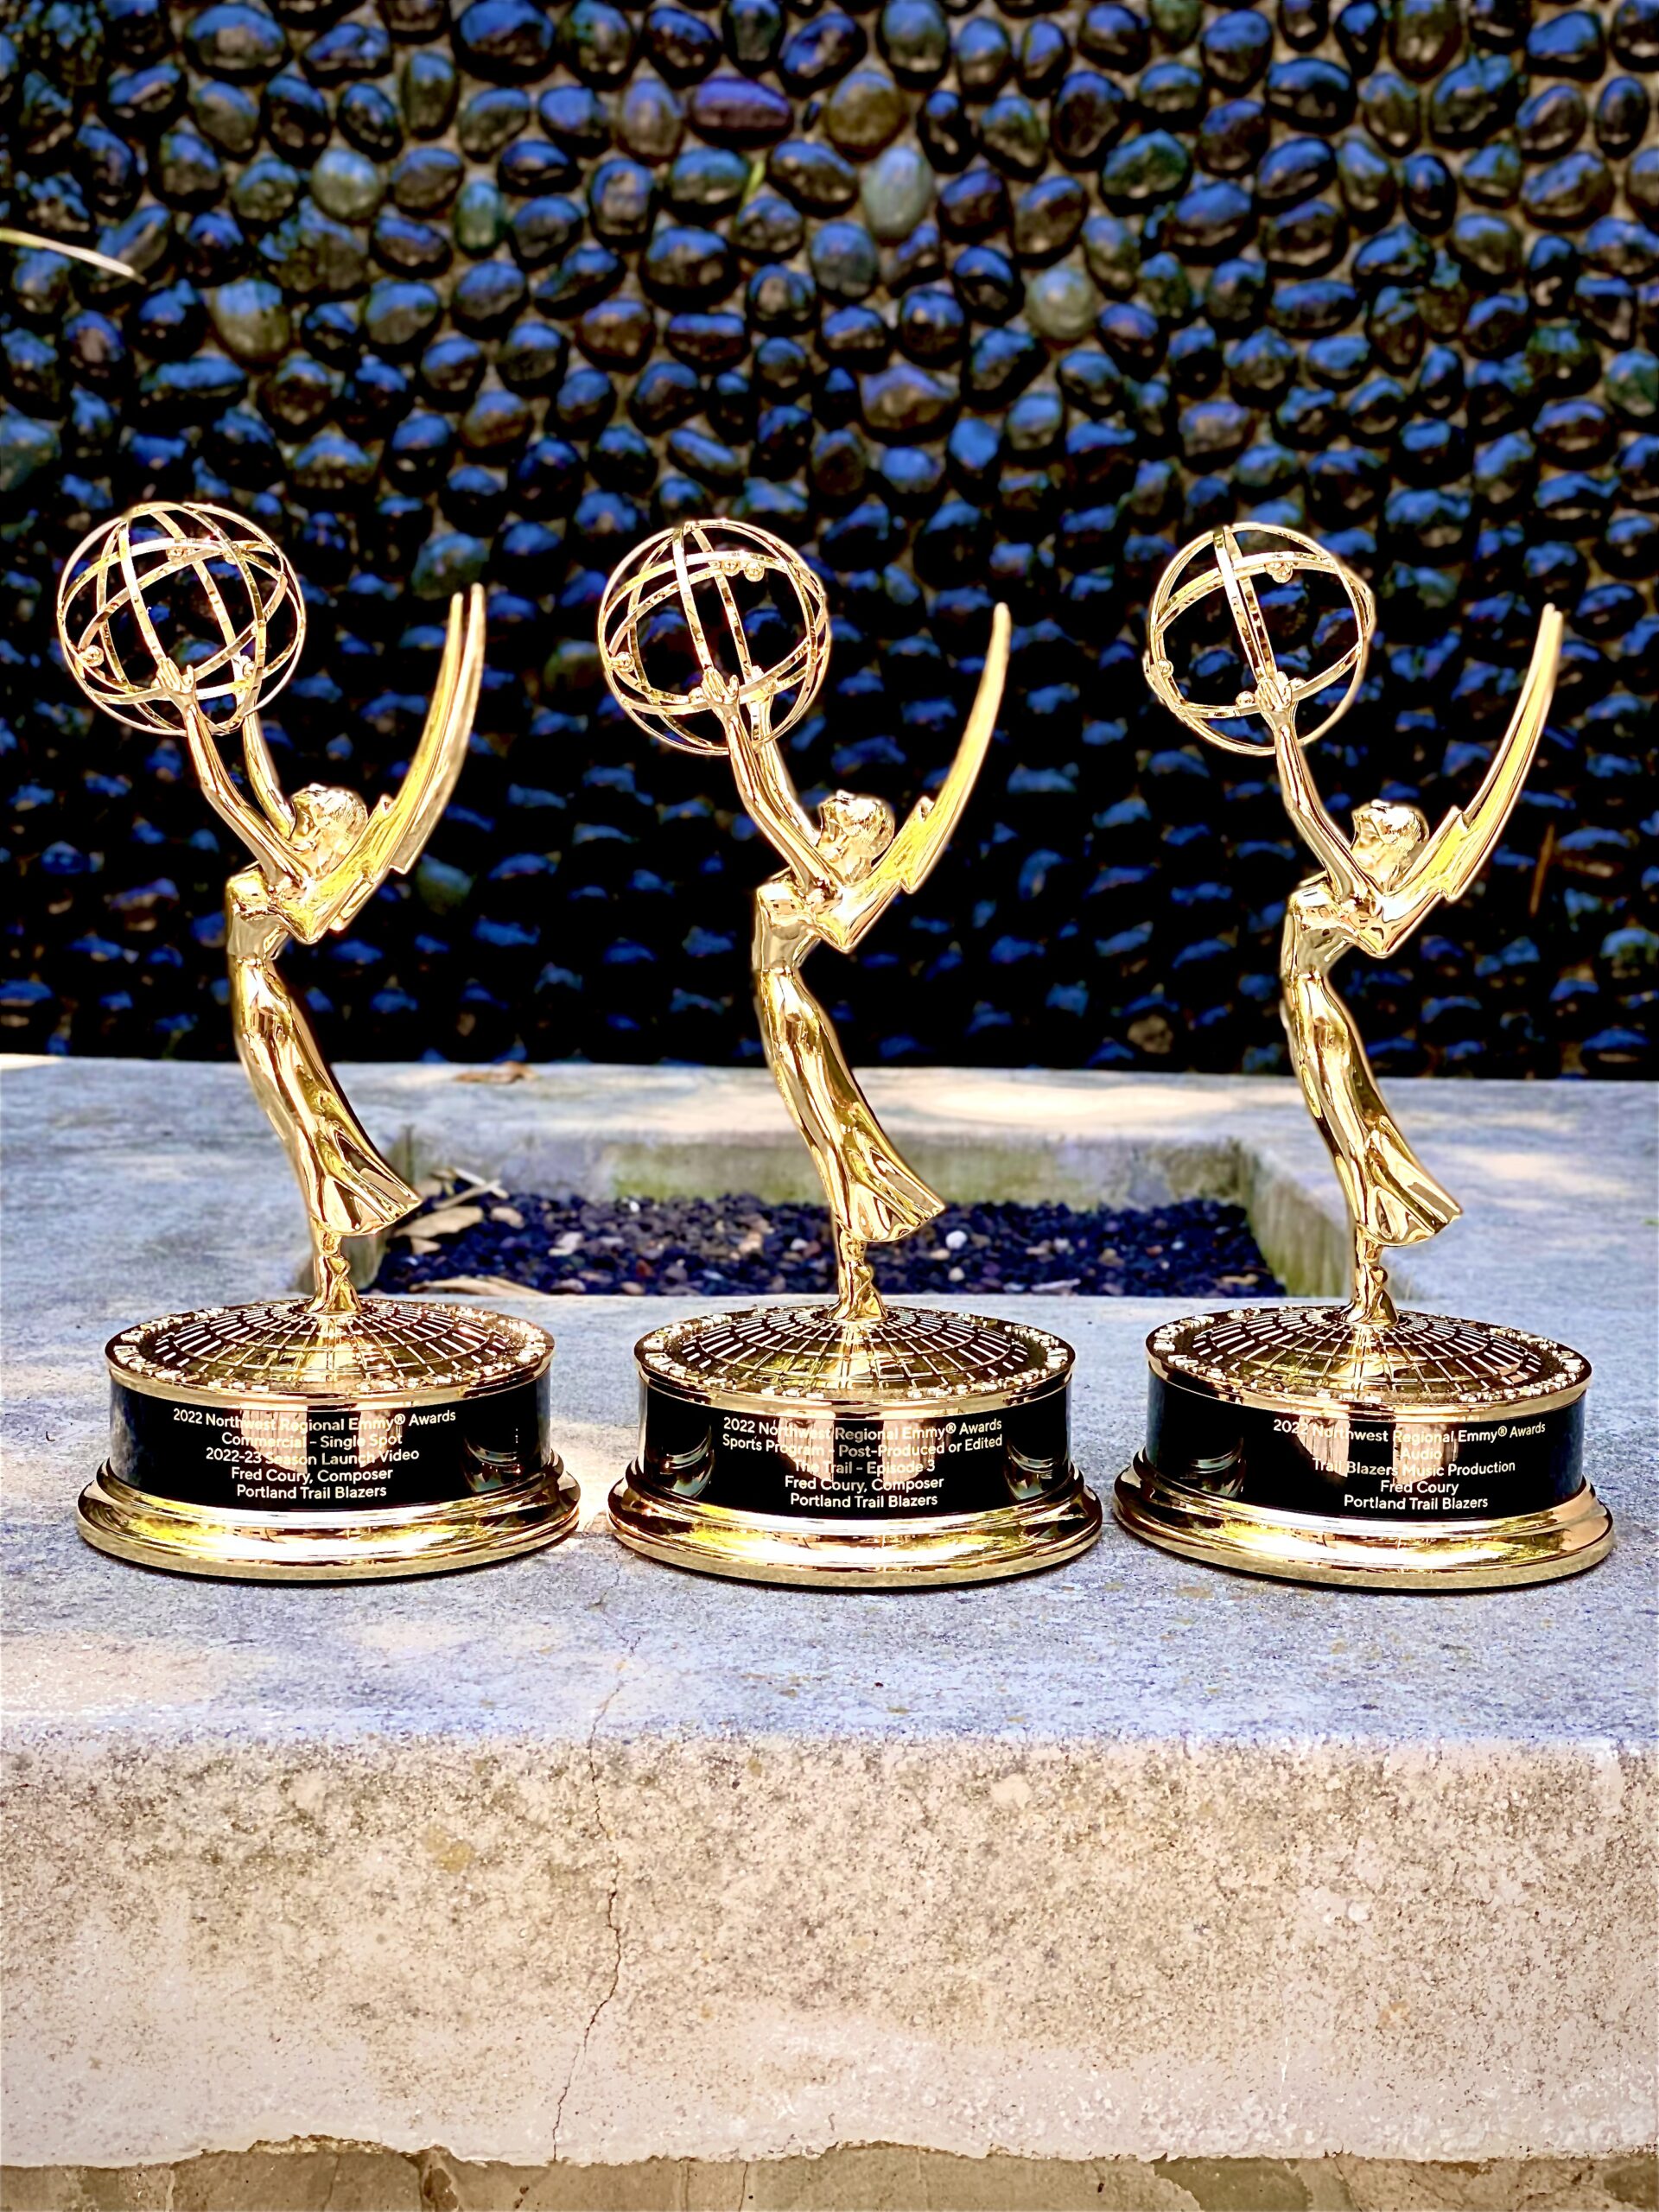 Multiple Emmys